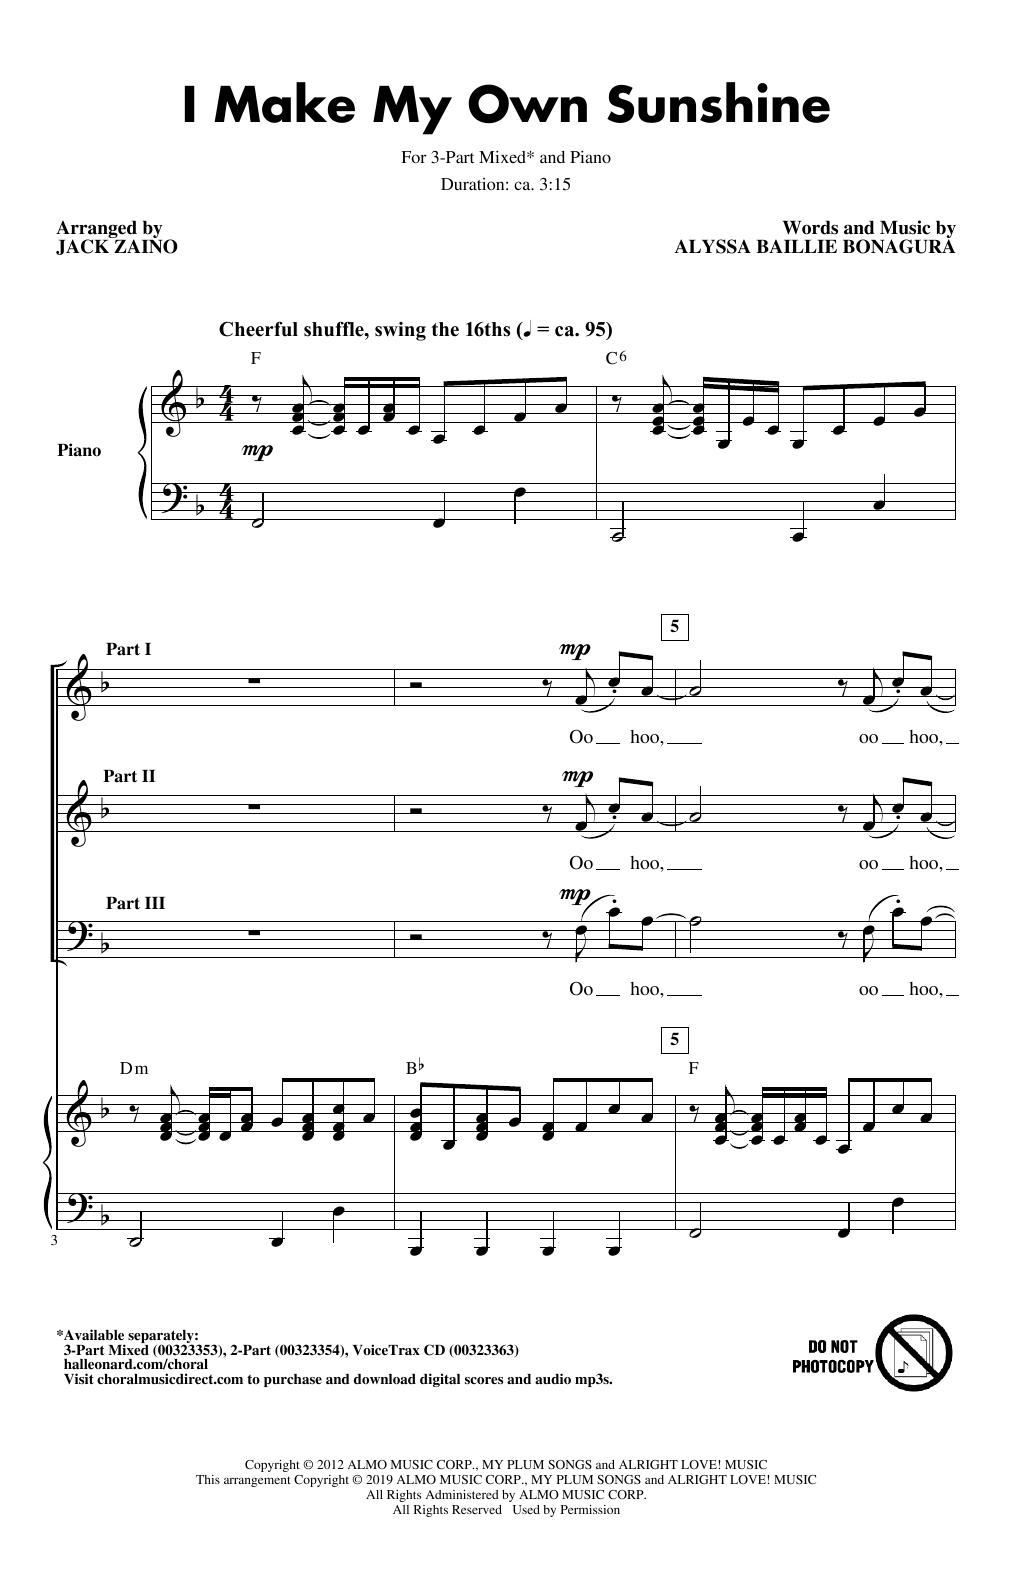 Alyssa Bonagura I Make My Own Sunshine (arr. Jack Zaino) Sheet Music Notes & Chords for 3-Part Mixed Choir - Download or Print PDF